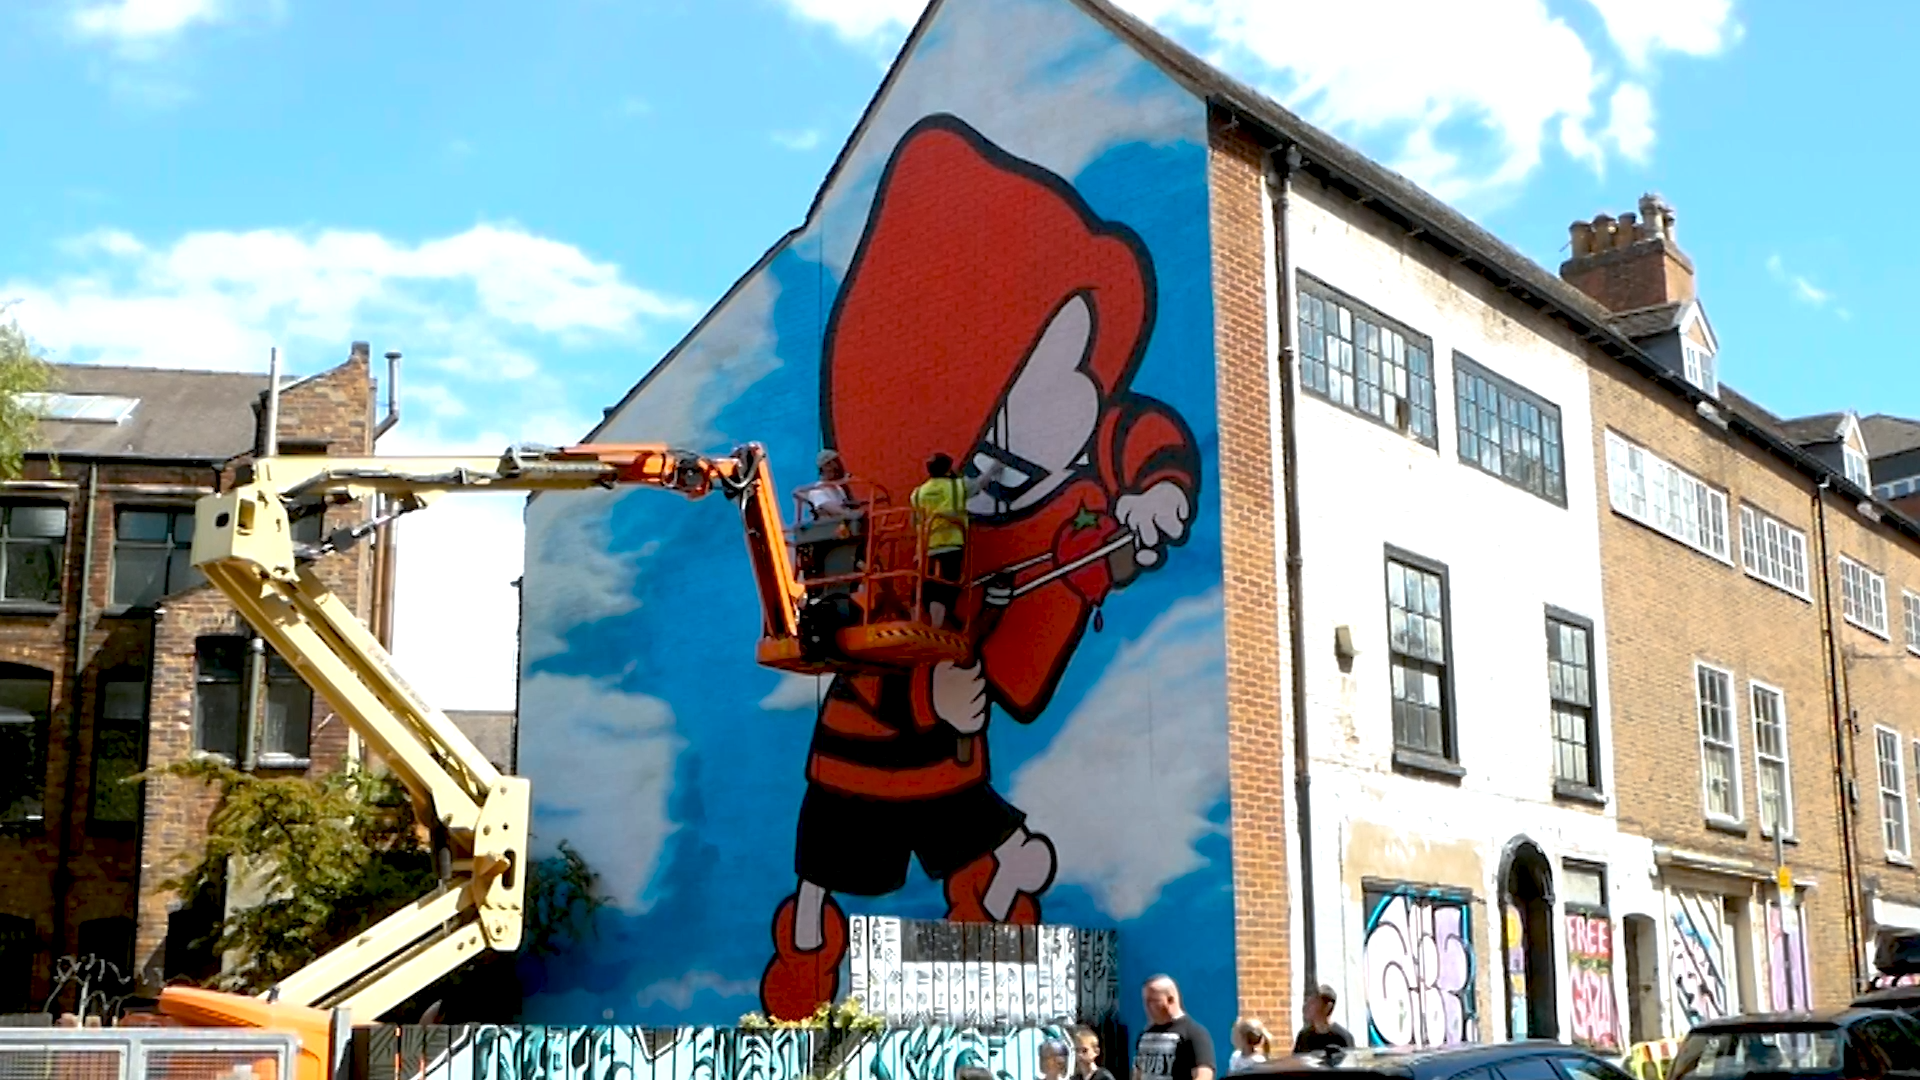 A street artist spray creating art in Nottingham city centre